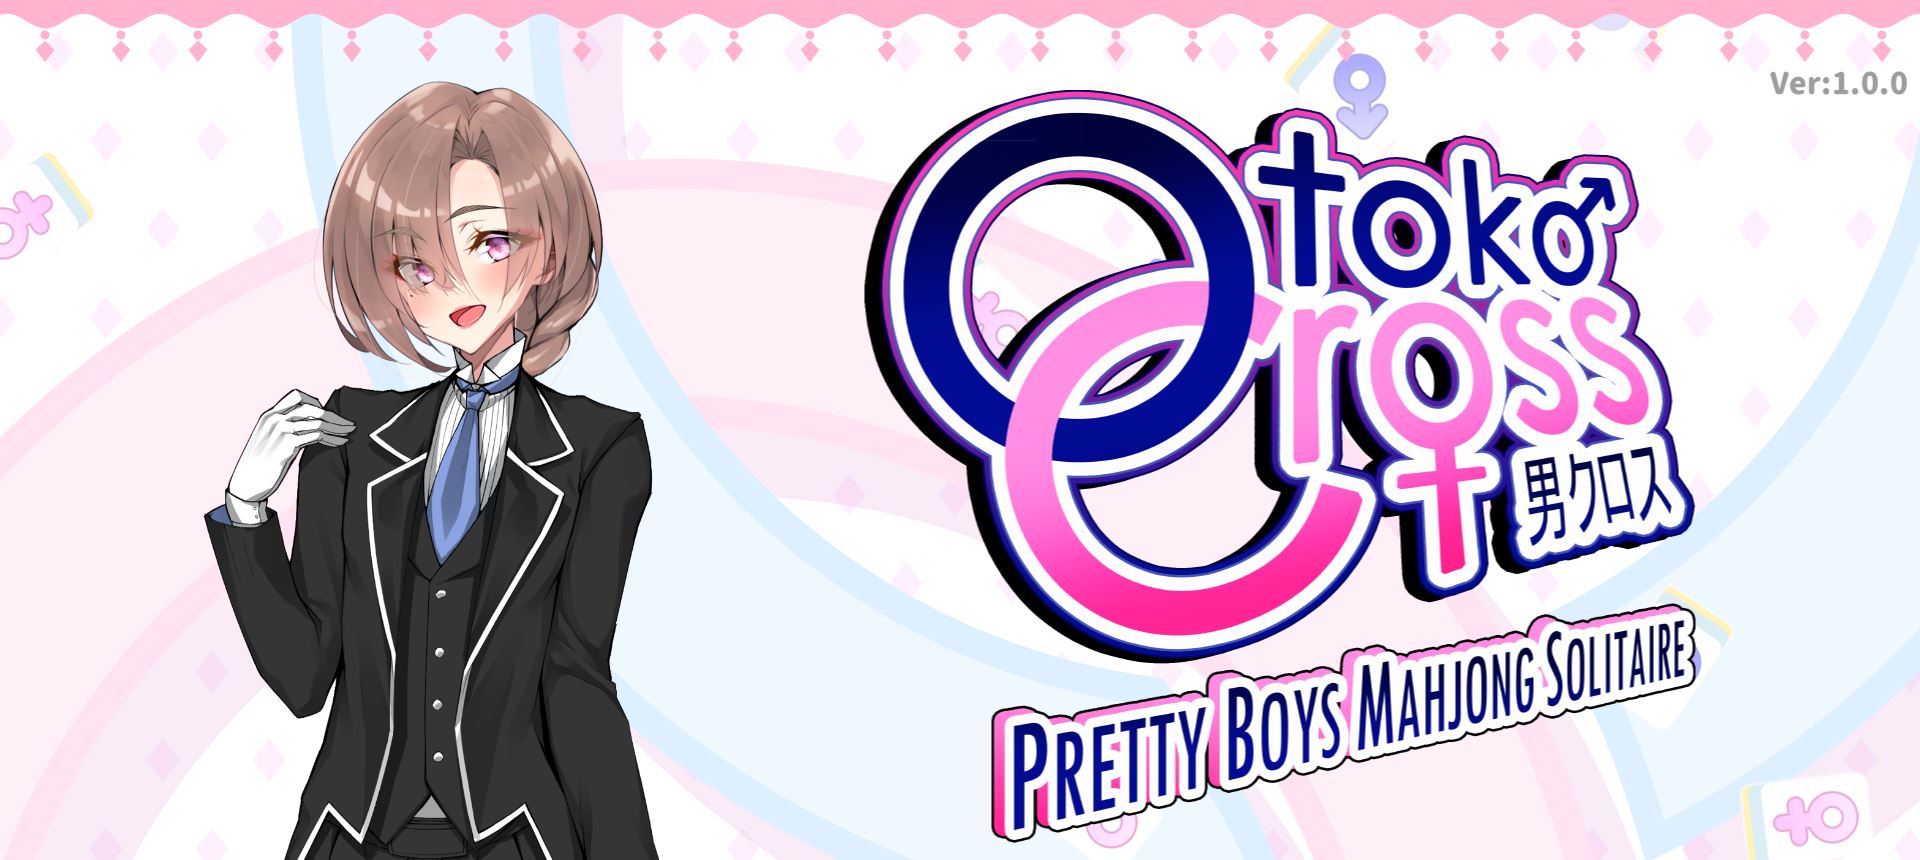 Otoko Cross: Pretty Boys Mahjong Solitaire porn xxx game download cover